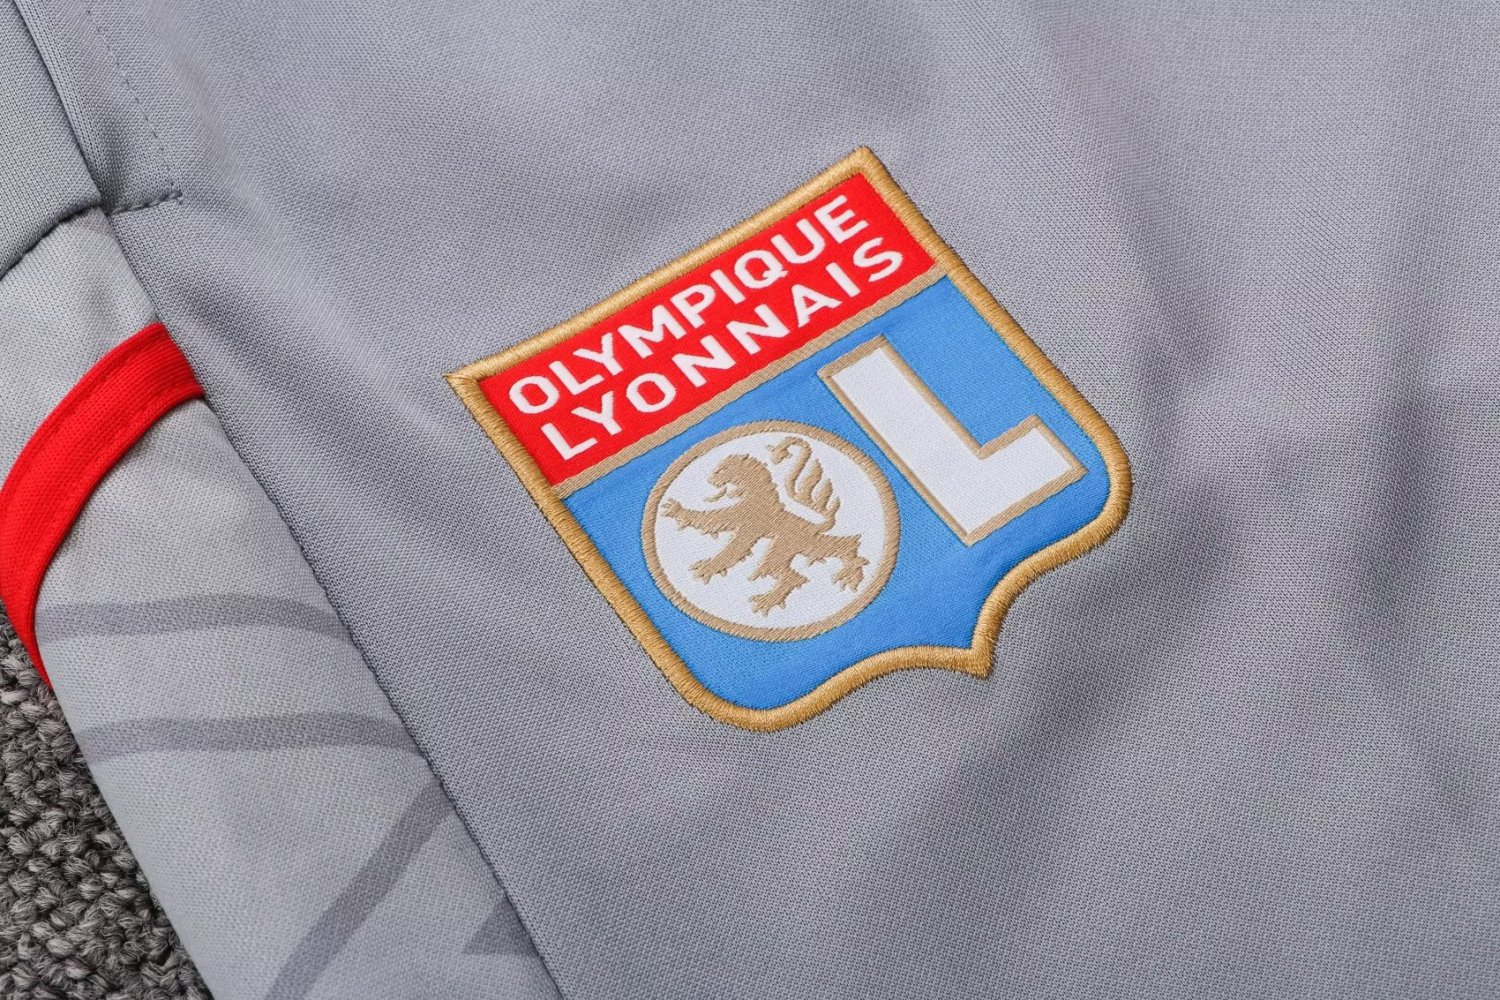 Olympique Lyonnais Soccer Training Suit Gray 2022/23 Mens